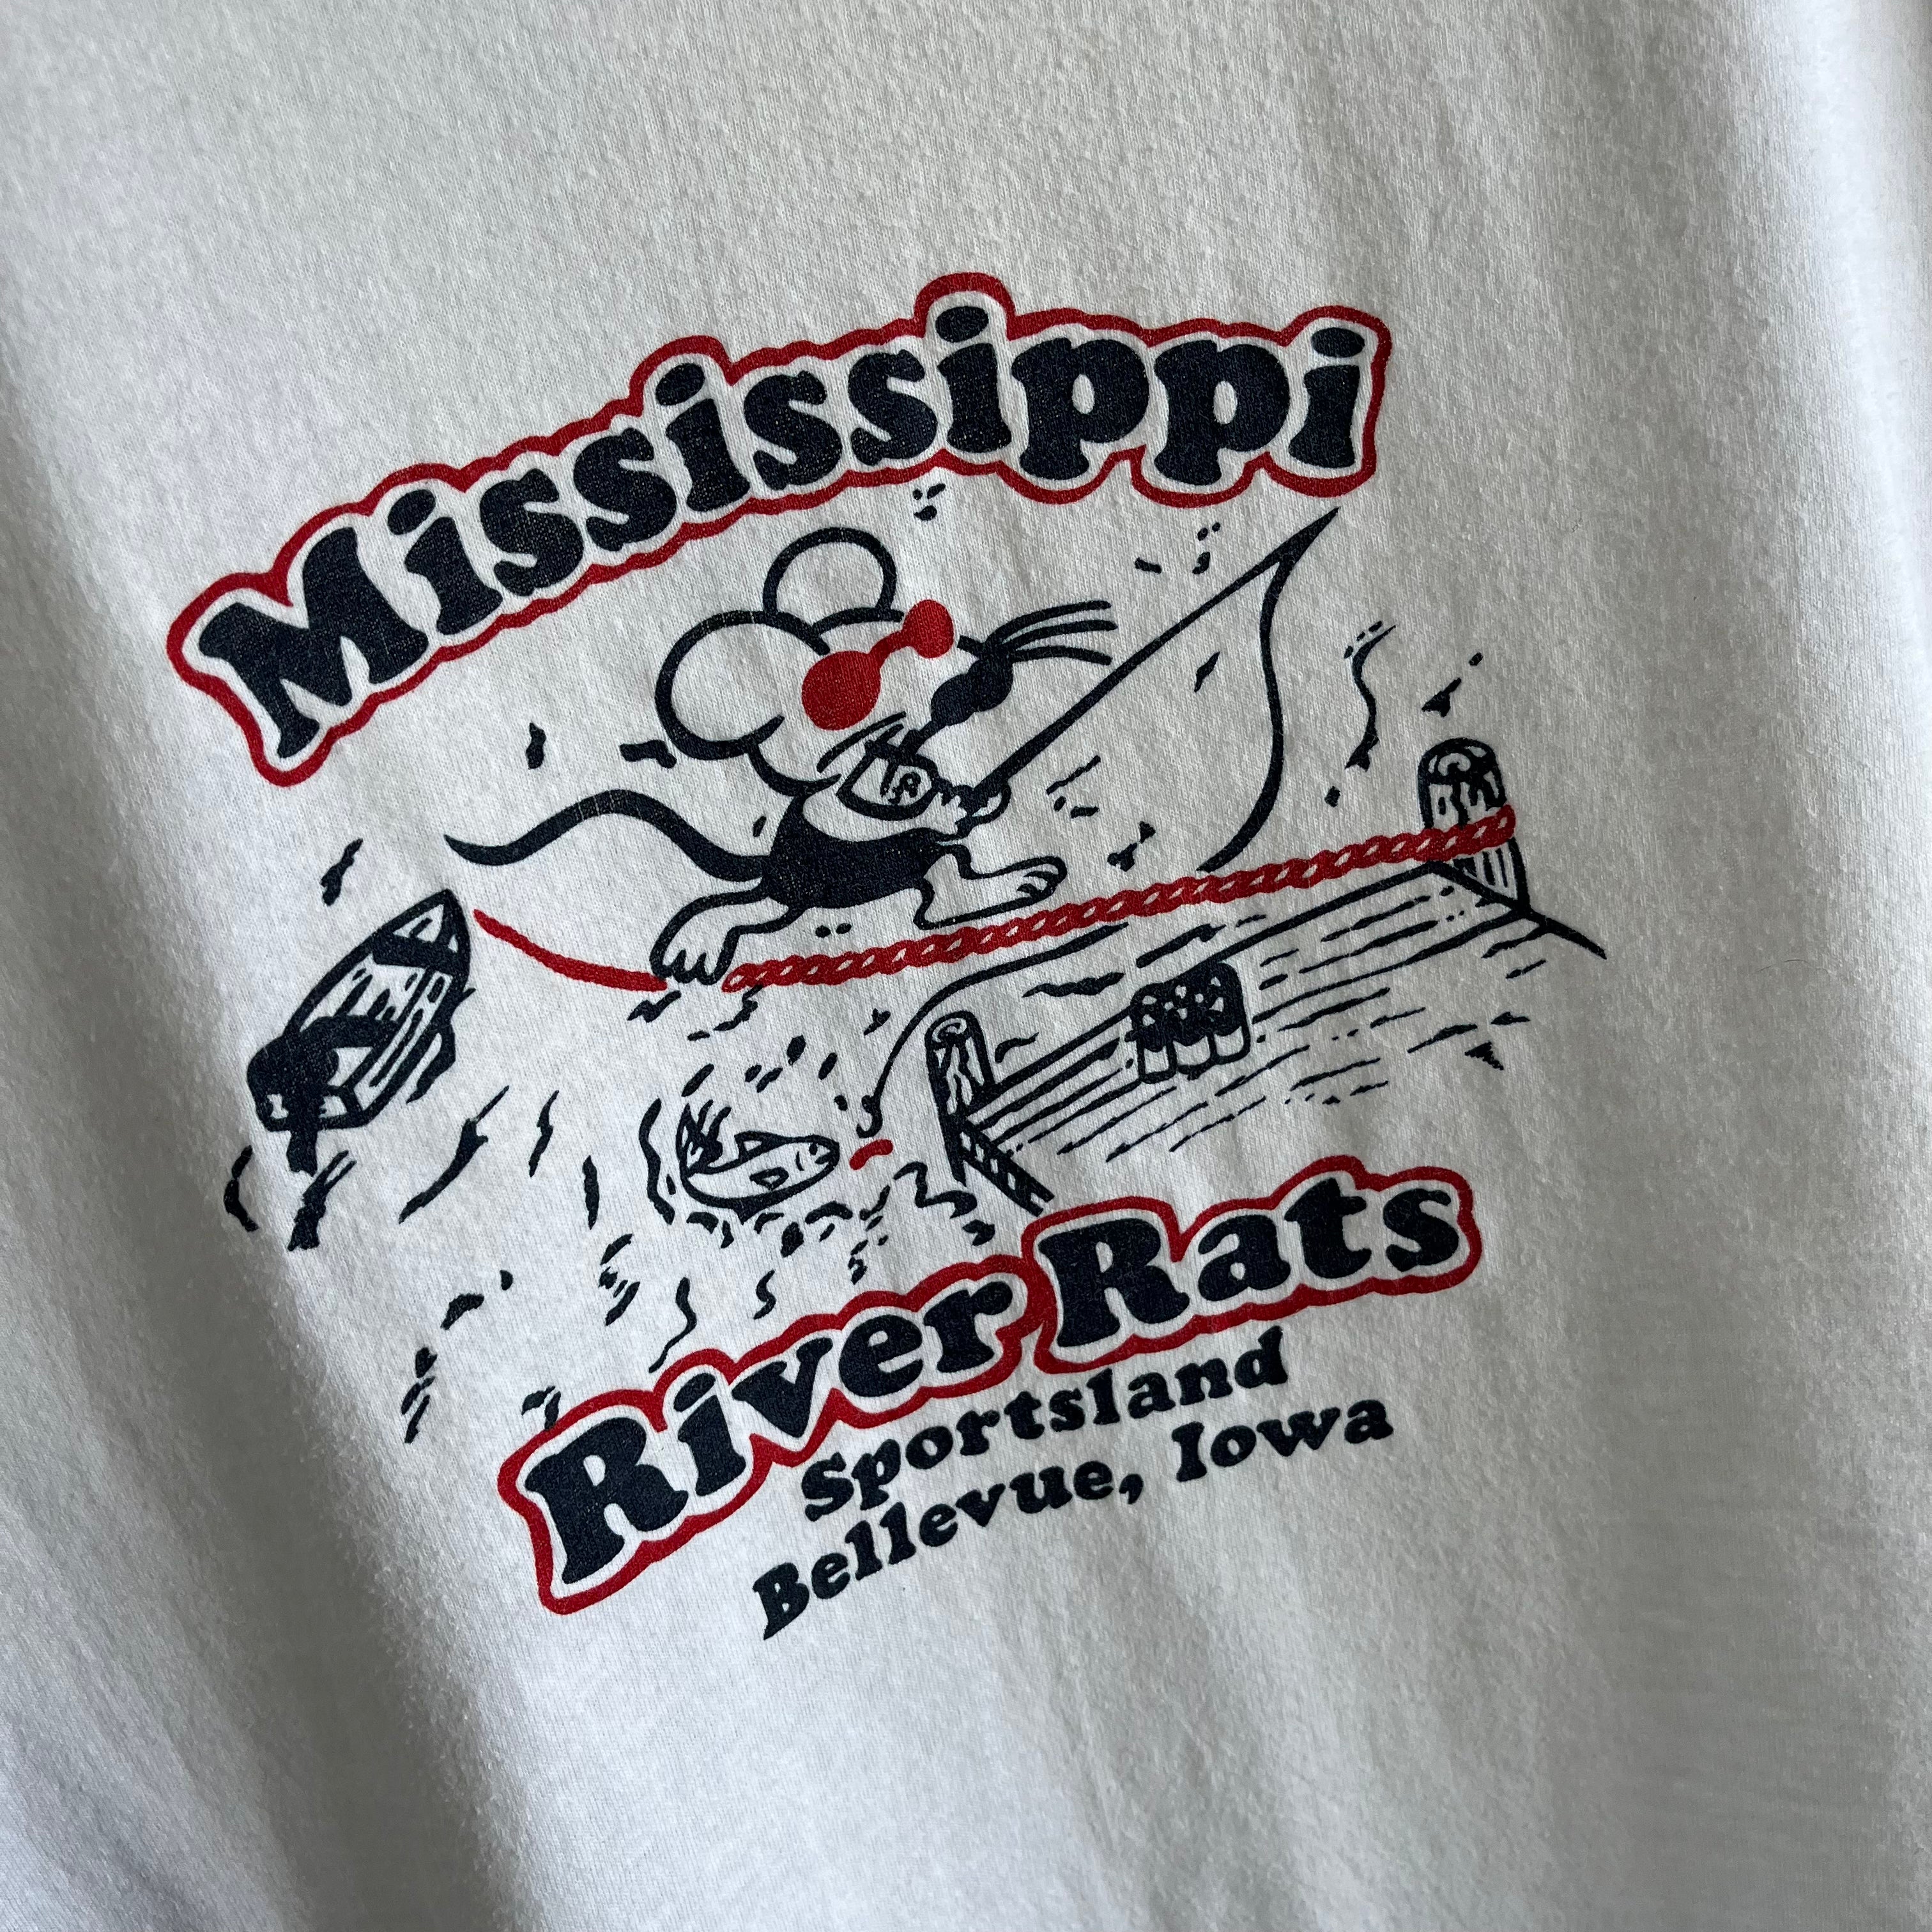 1980s Mississippi River Rats - Sportsland Bellevue, Iowa - T-Shirt by Screen Stars.